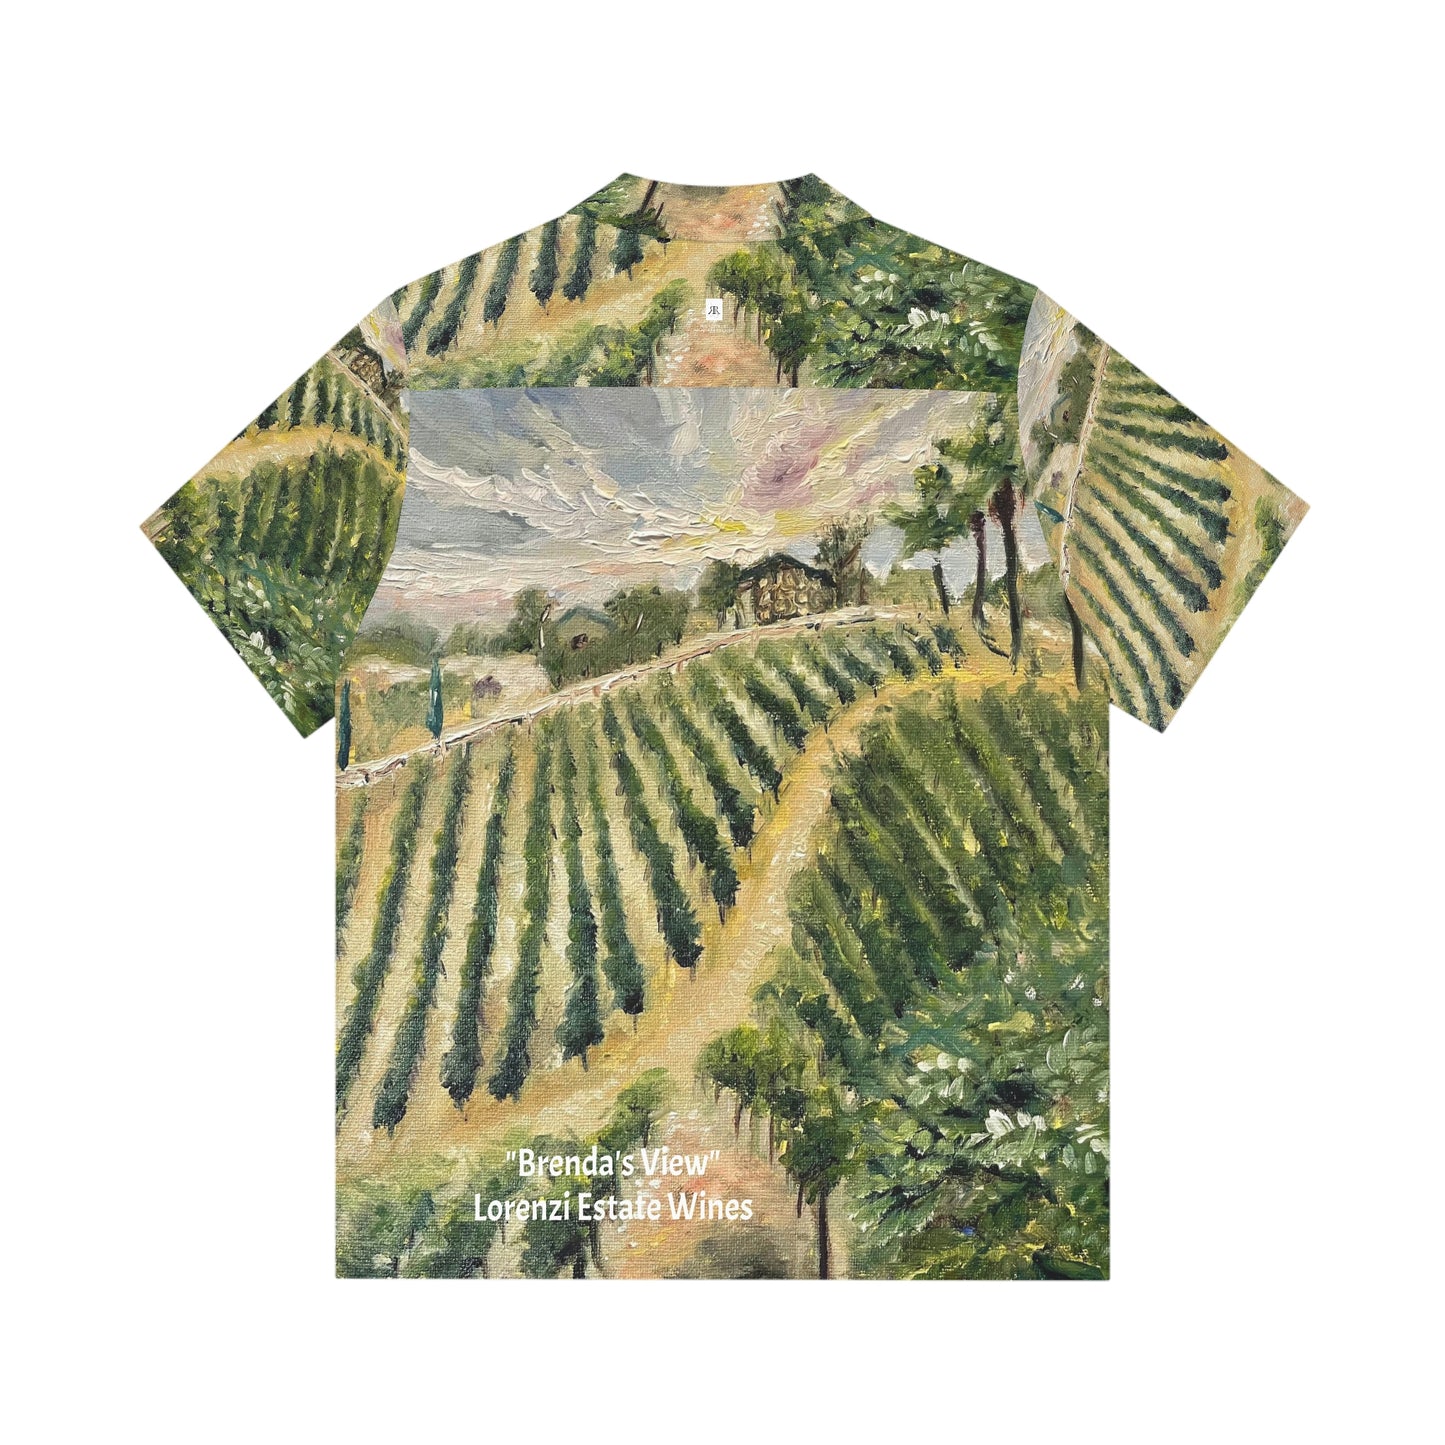 Brenda's View at Lorenzi Estate Wines Temecula Oil Landscape Men's Hawaiian Shirt